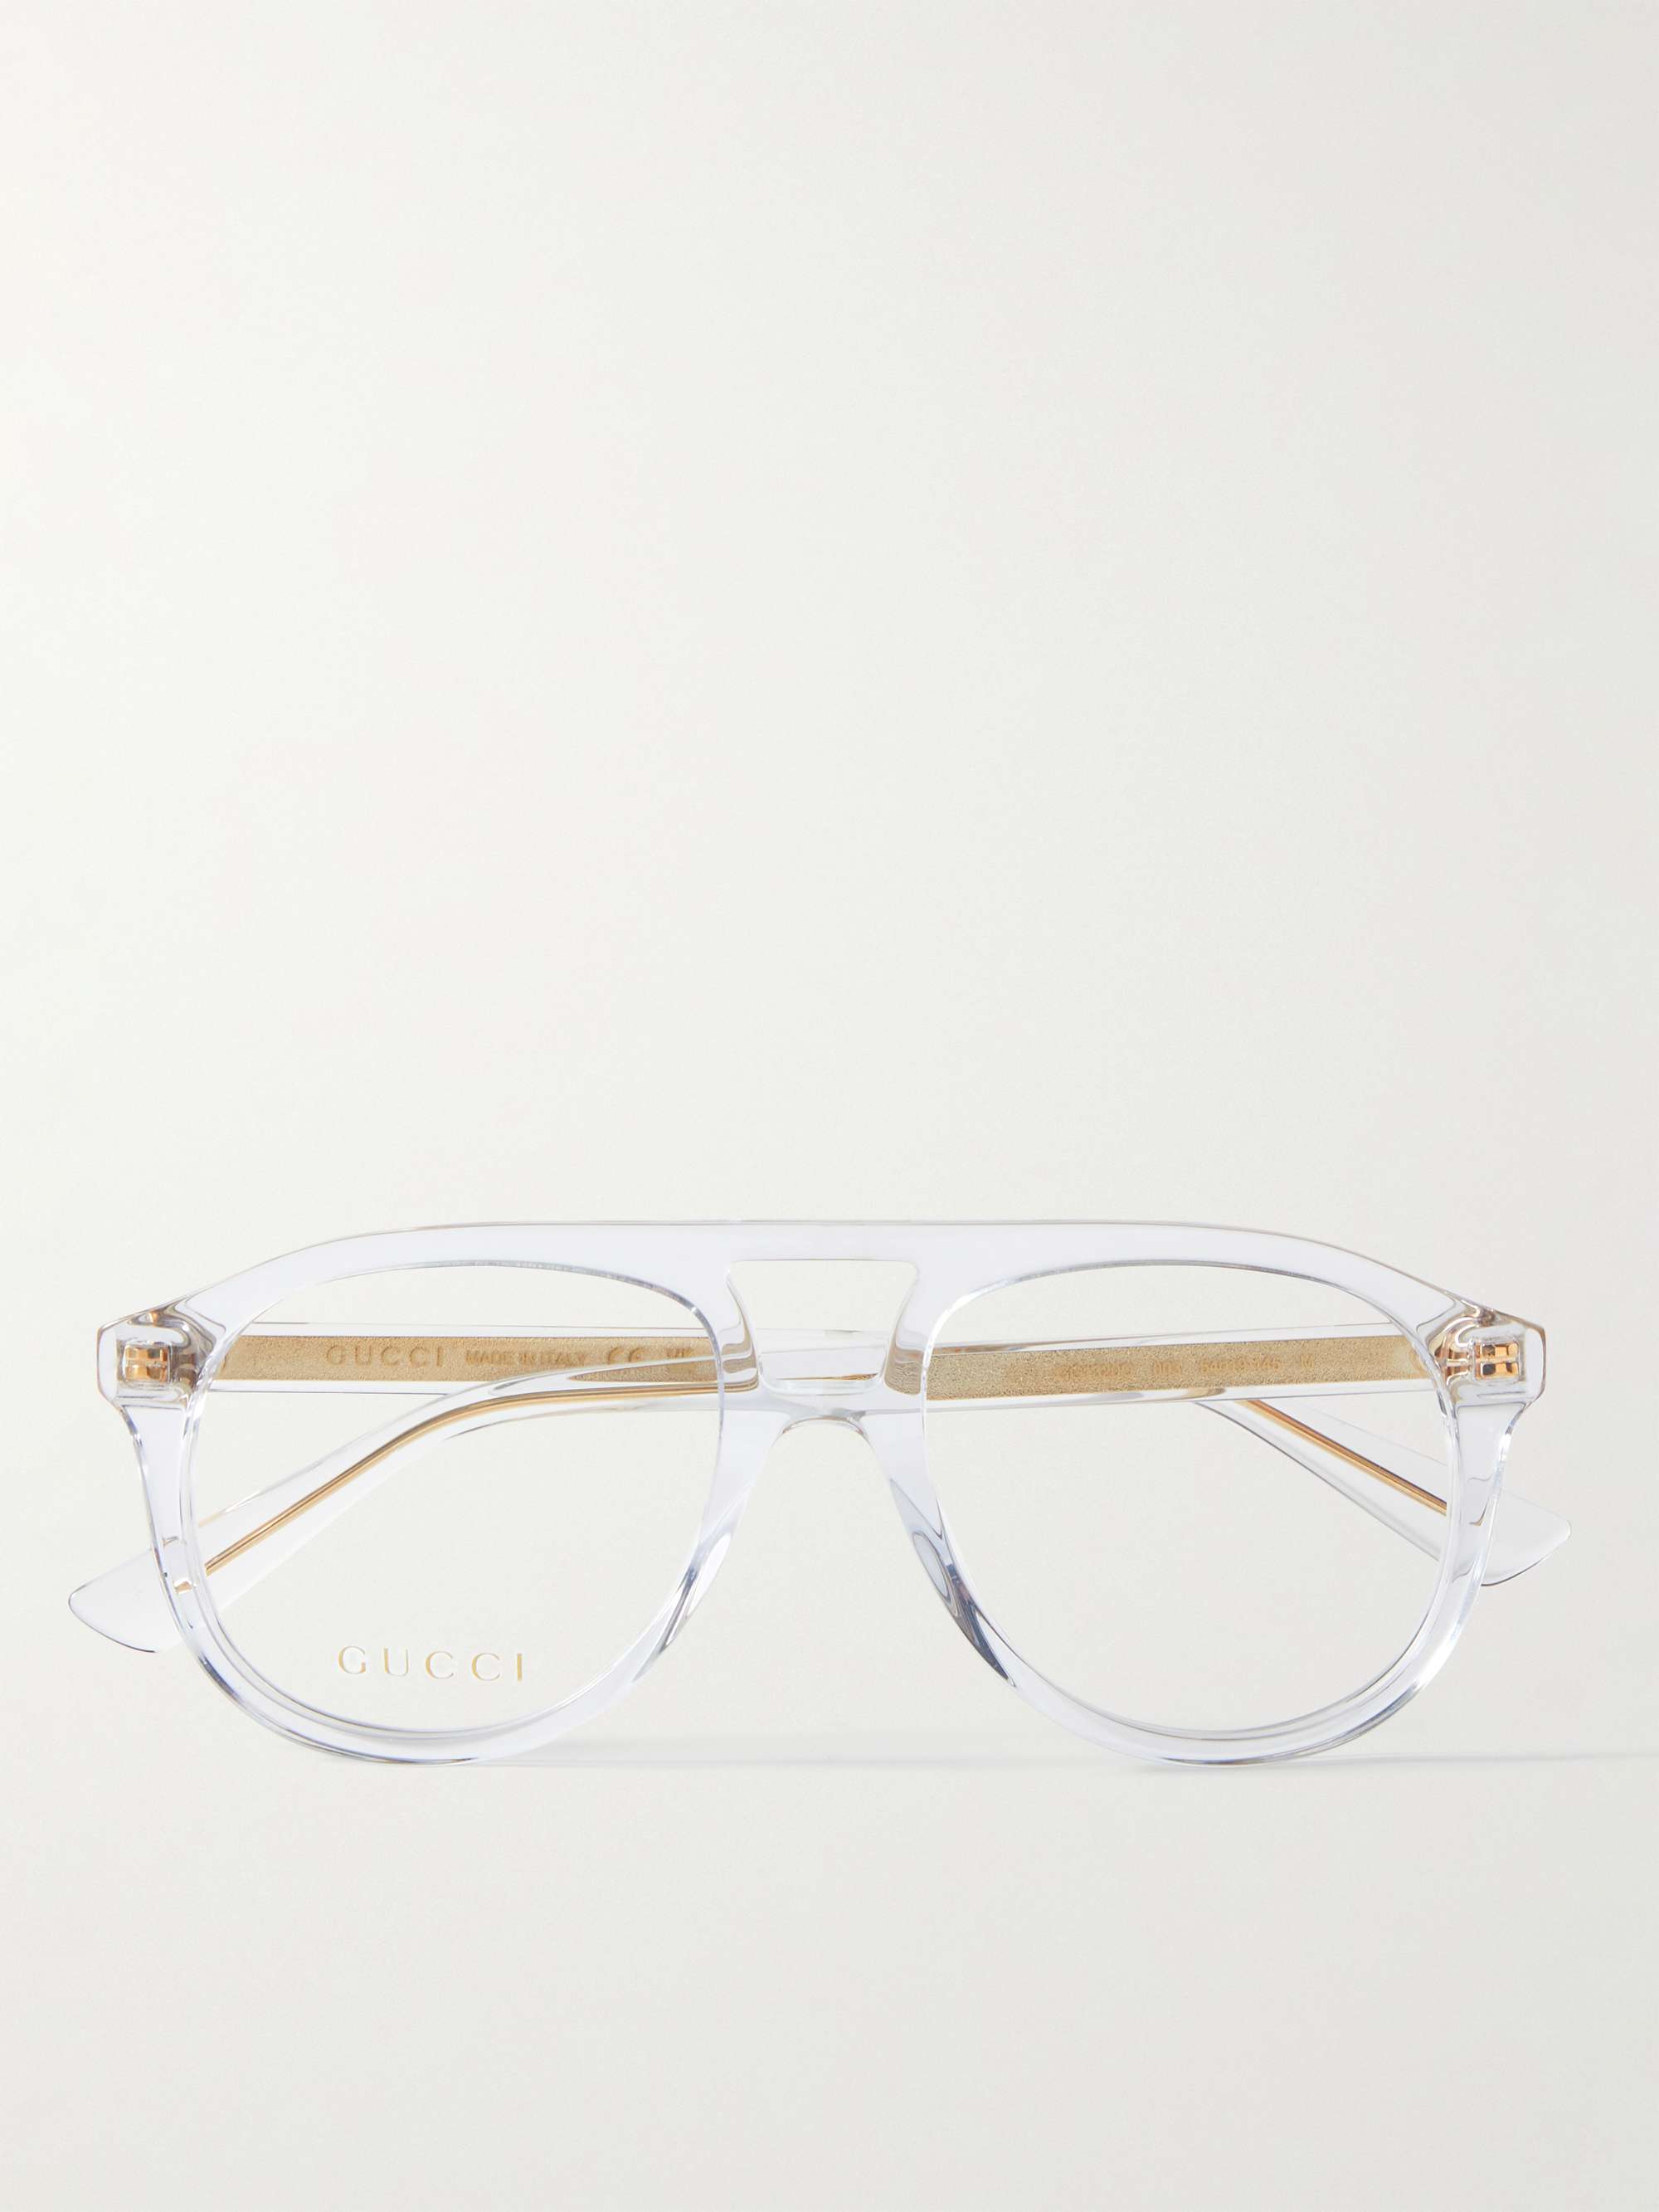 GUCCI EYEWEAR '80s Monoco Aviator-Style Acetate Optical Glasses